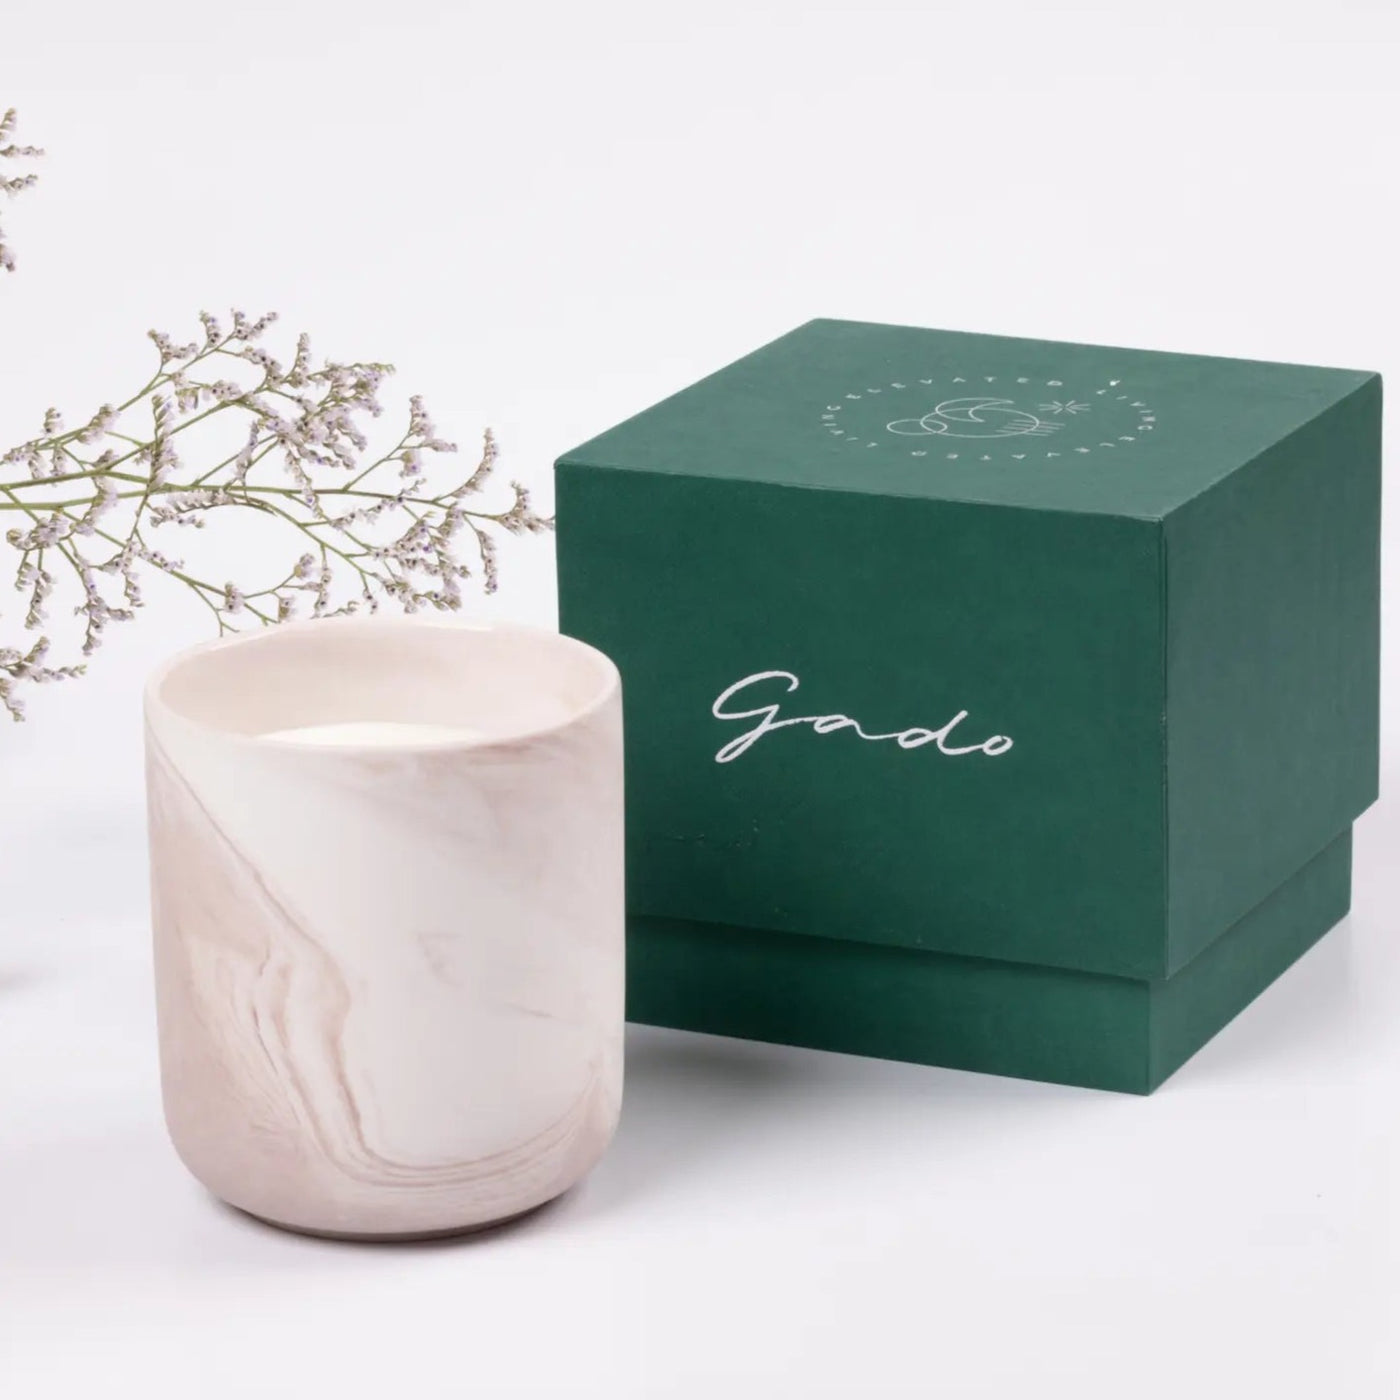 GADO LIVING Izna Spiced Cedar and Musk Candle With box